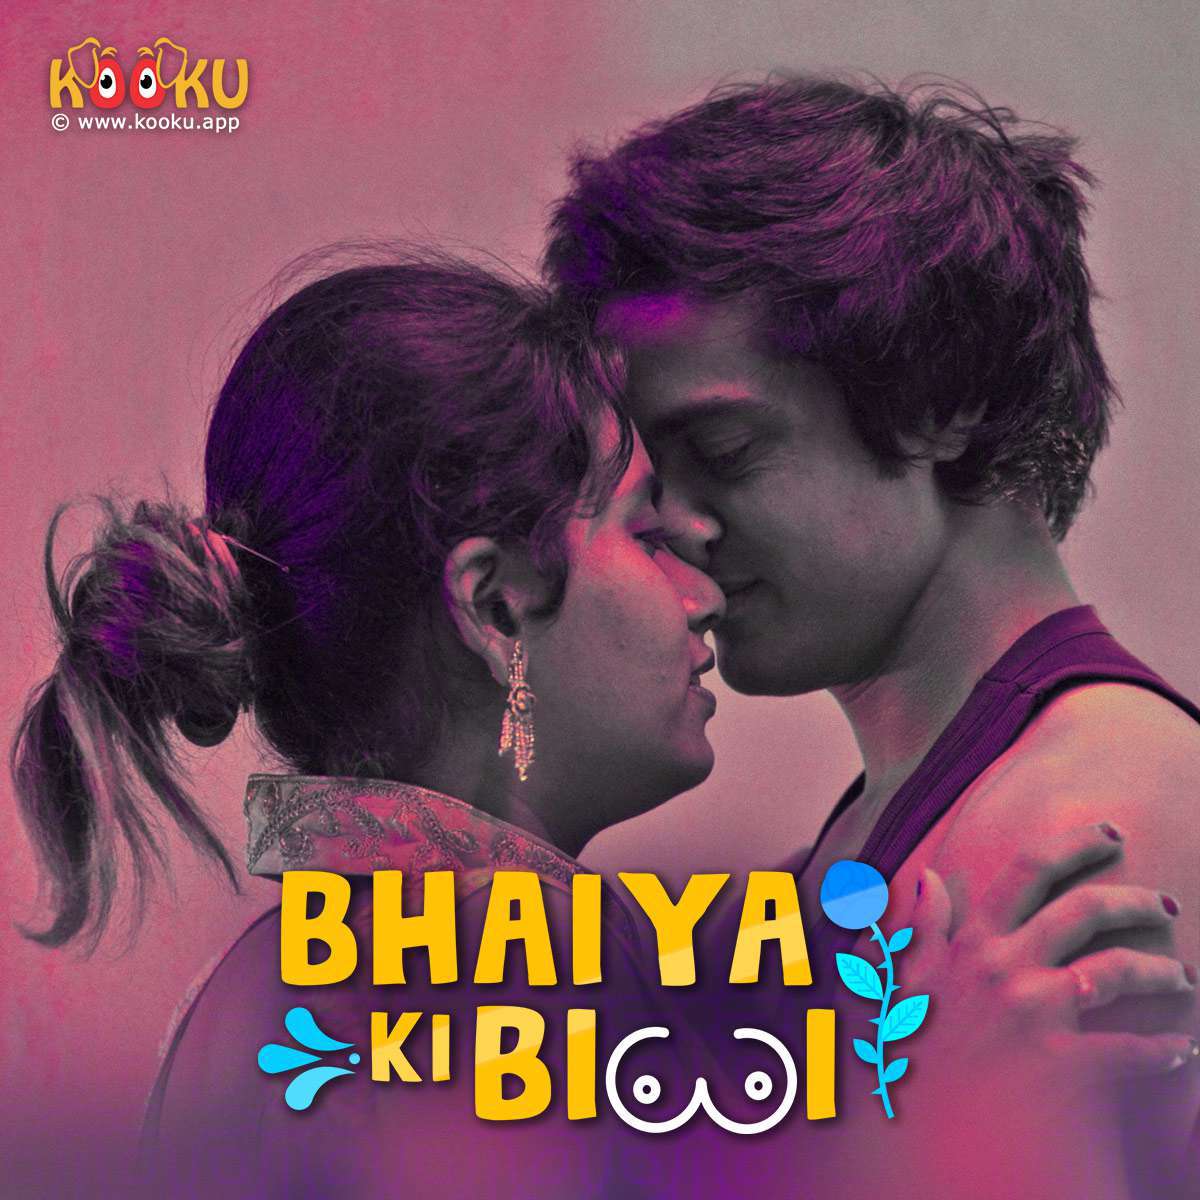 Bhaiya Ki Biwi S01 2020 Kooku